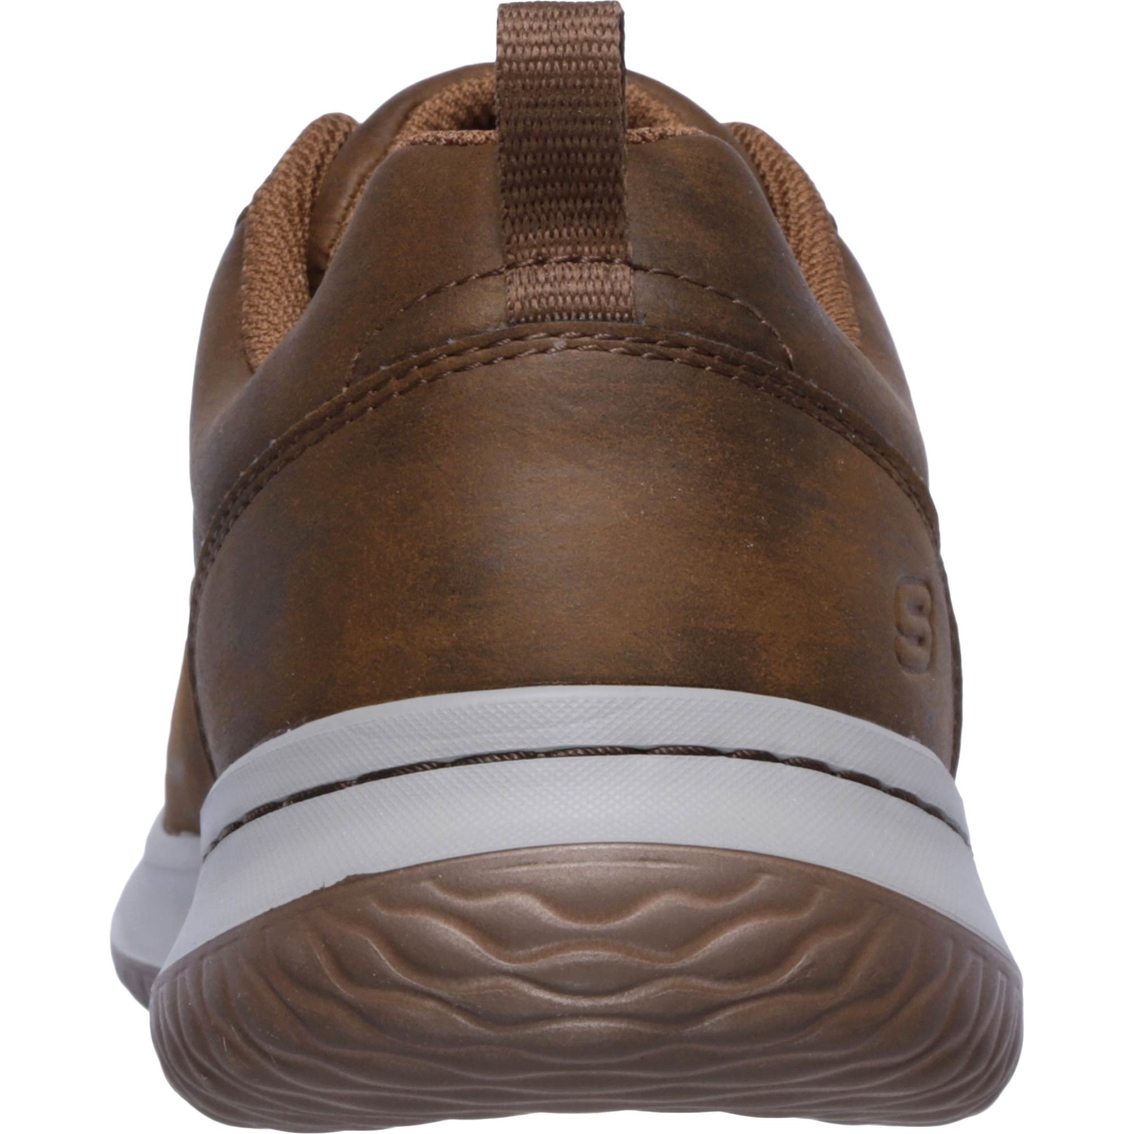 Skechers Men's Streetwear Delson-Antigo Shoes - Image 4 of 6